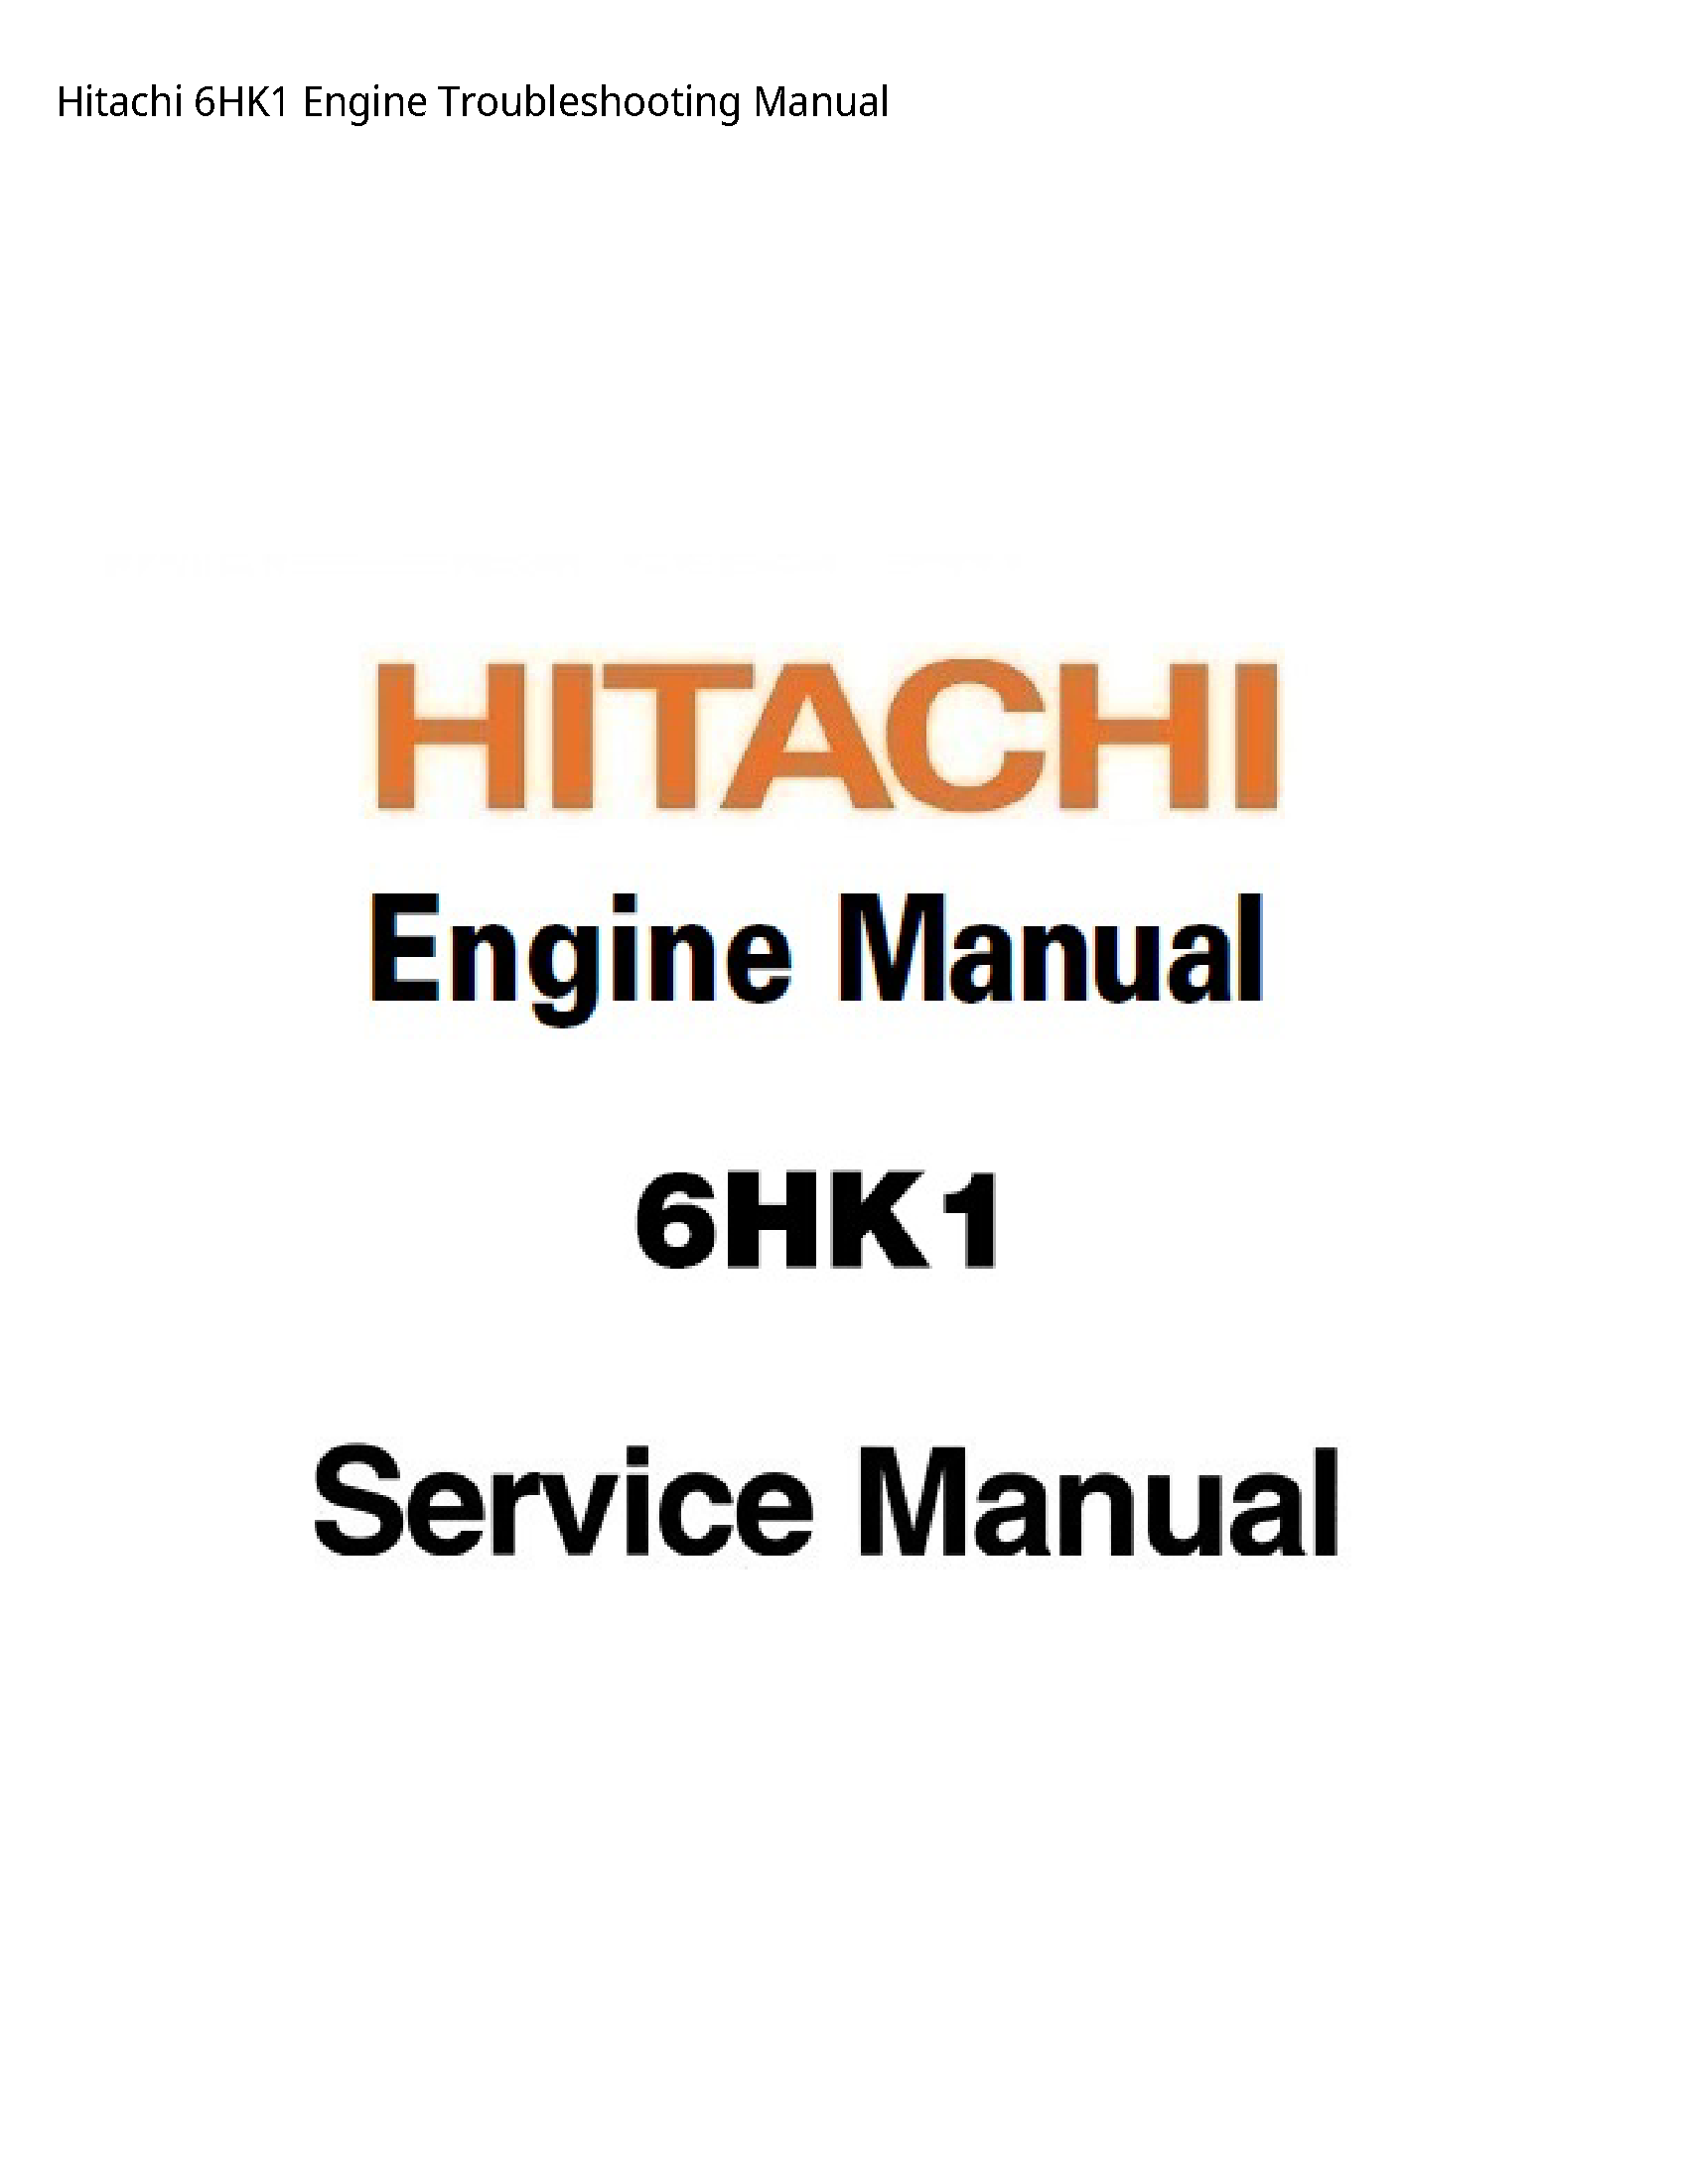 Hitachi 6HK1 Engine Troubleshooting manual